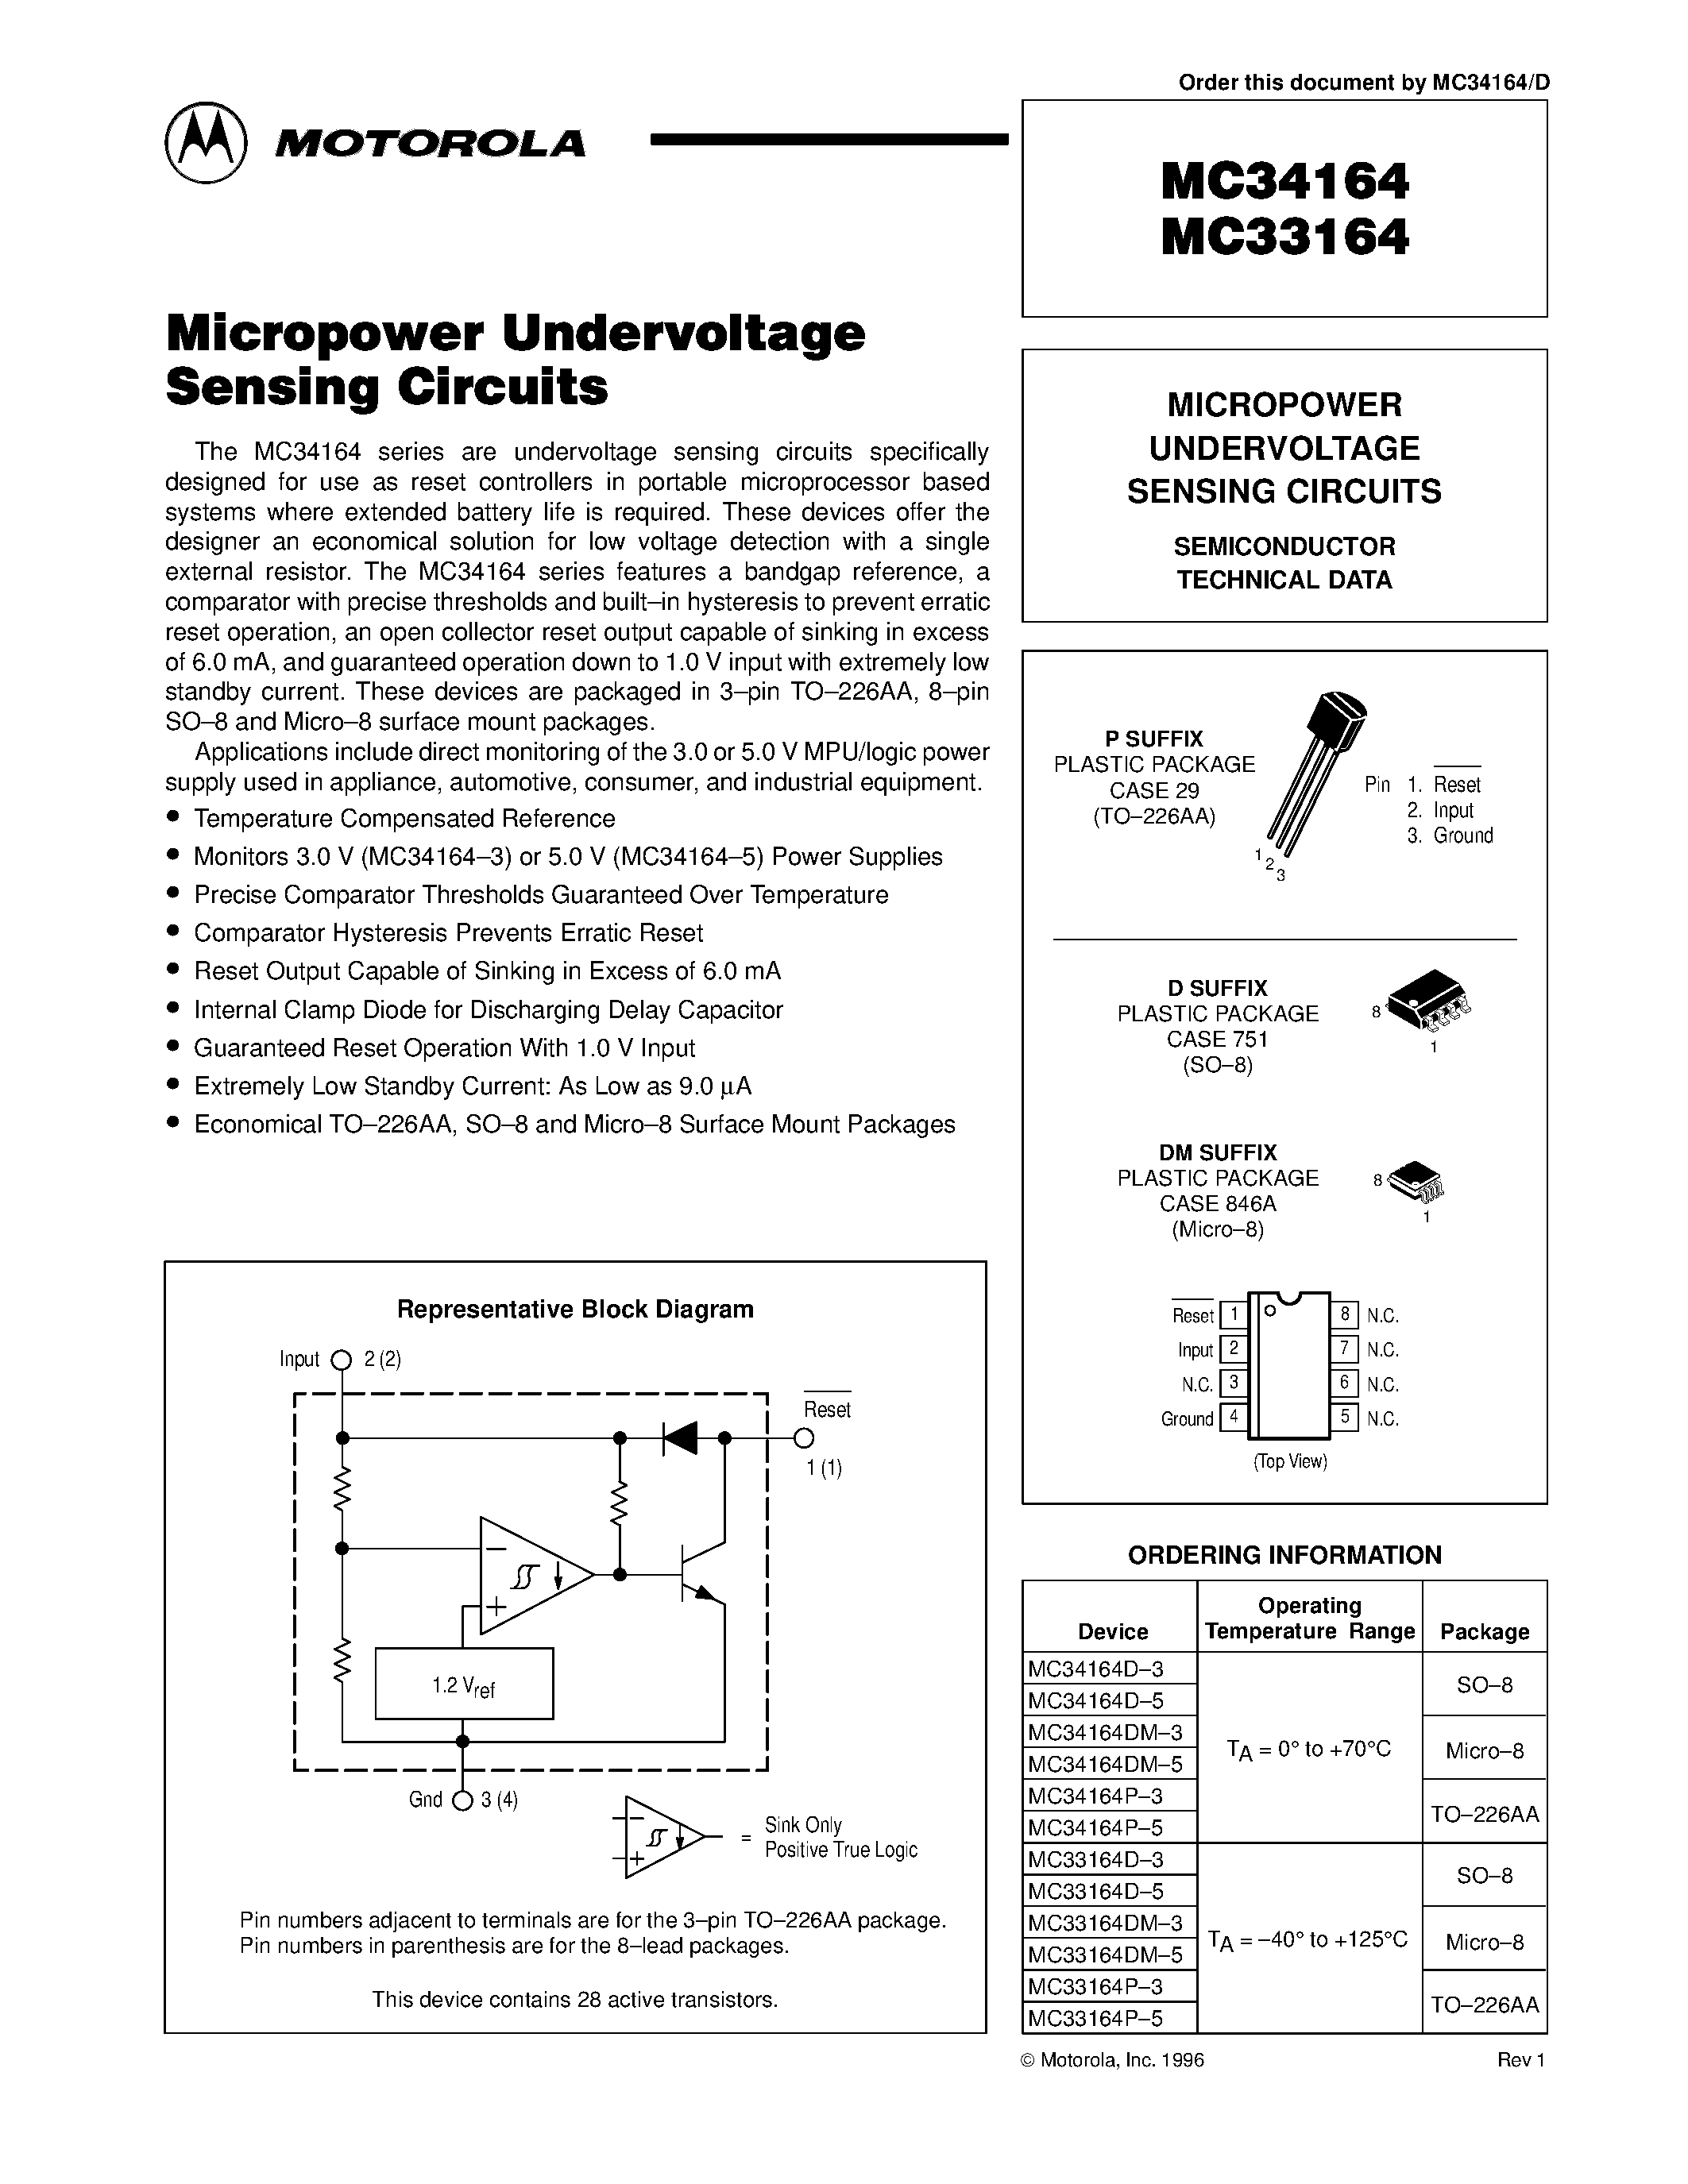 Даташит MC33164 - MICROPOWER UNDERVOLTAGE SENSING CIRCUITS страница 1